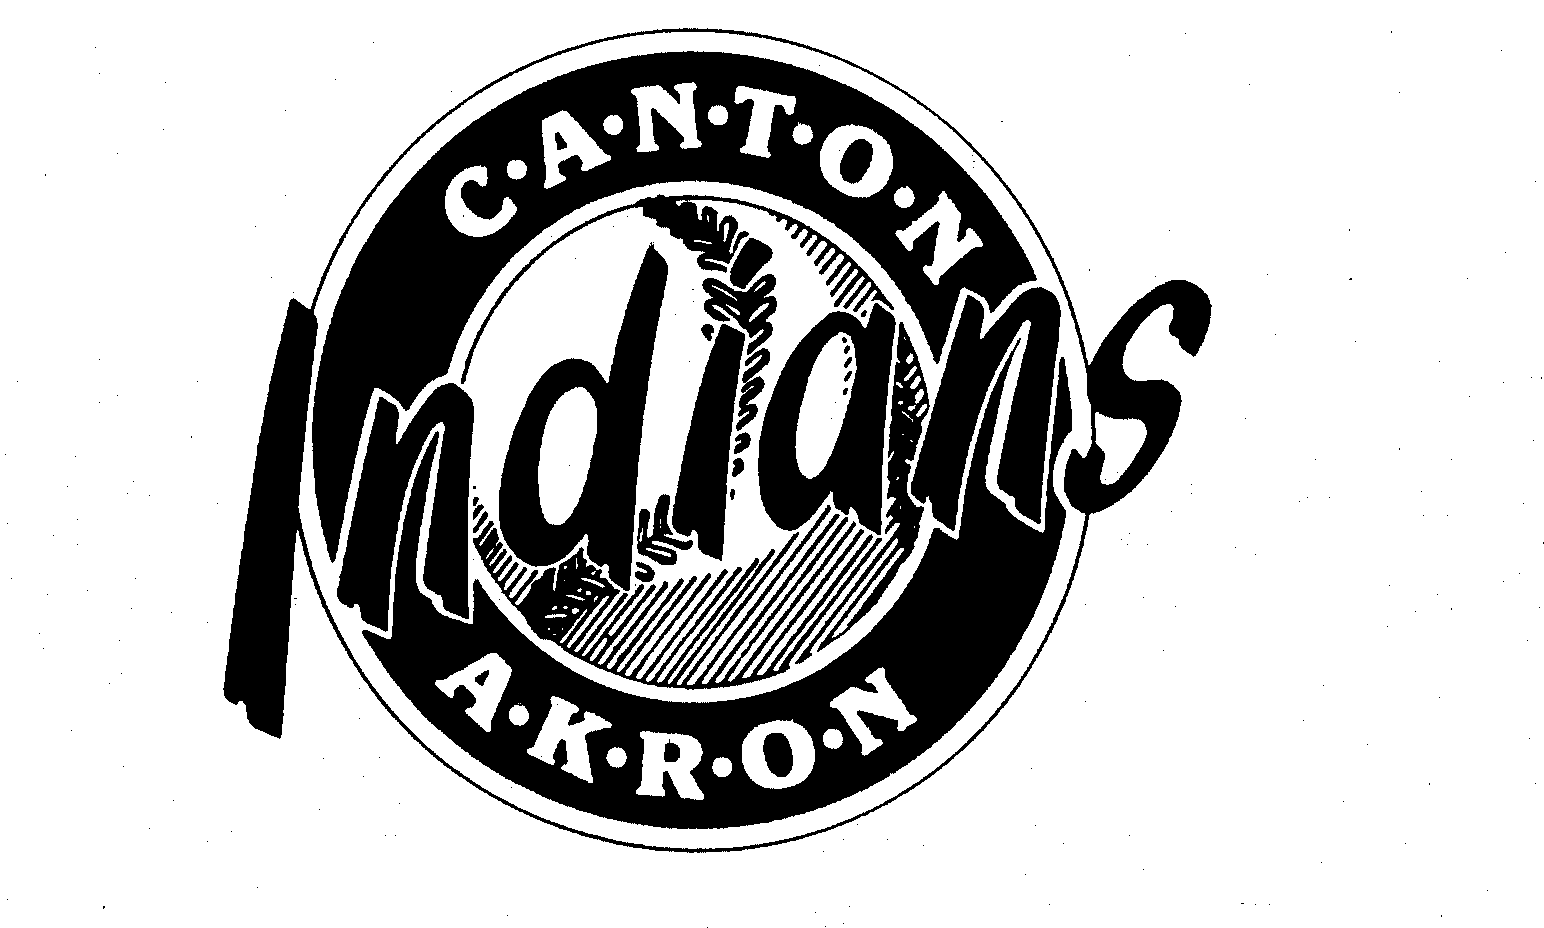  CANTON AKRON INDIANS